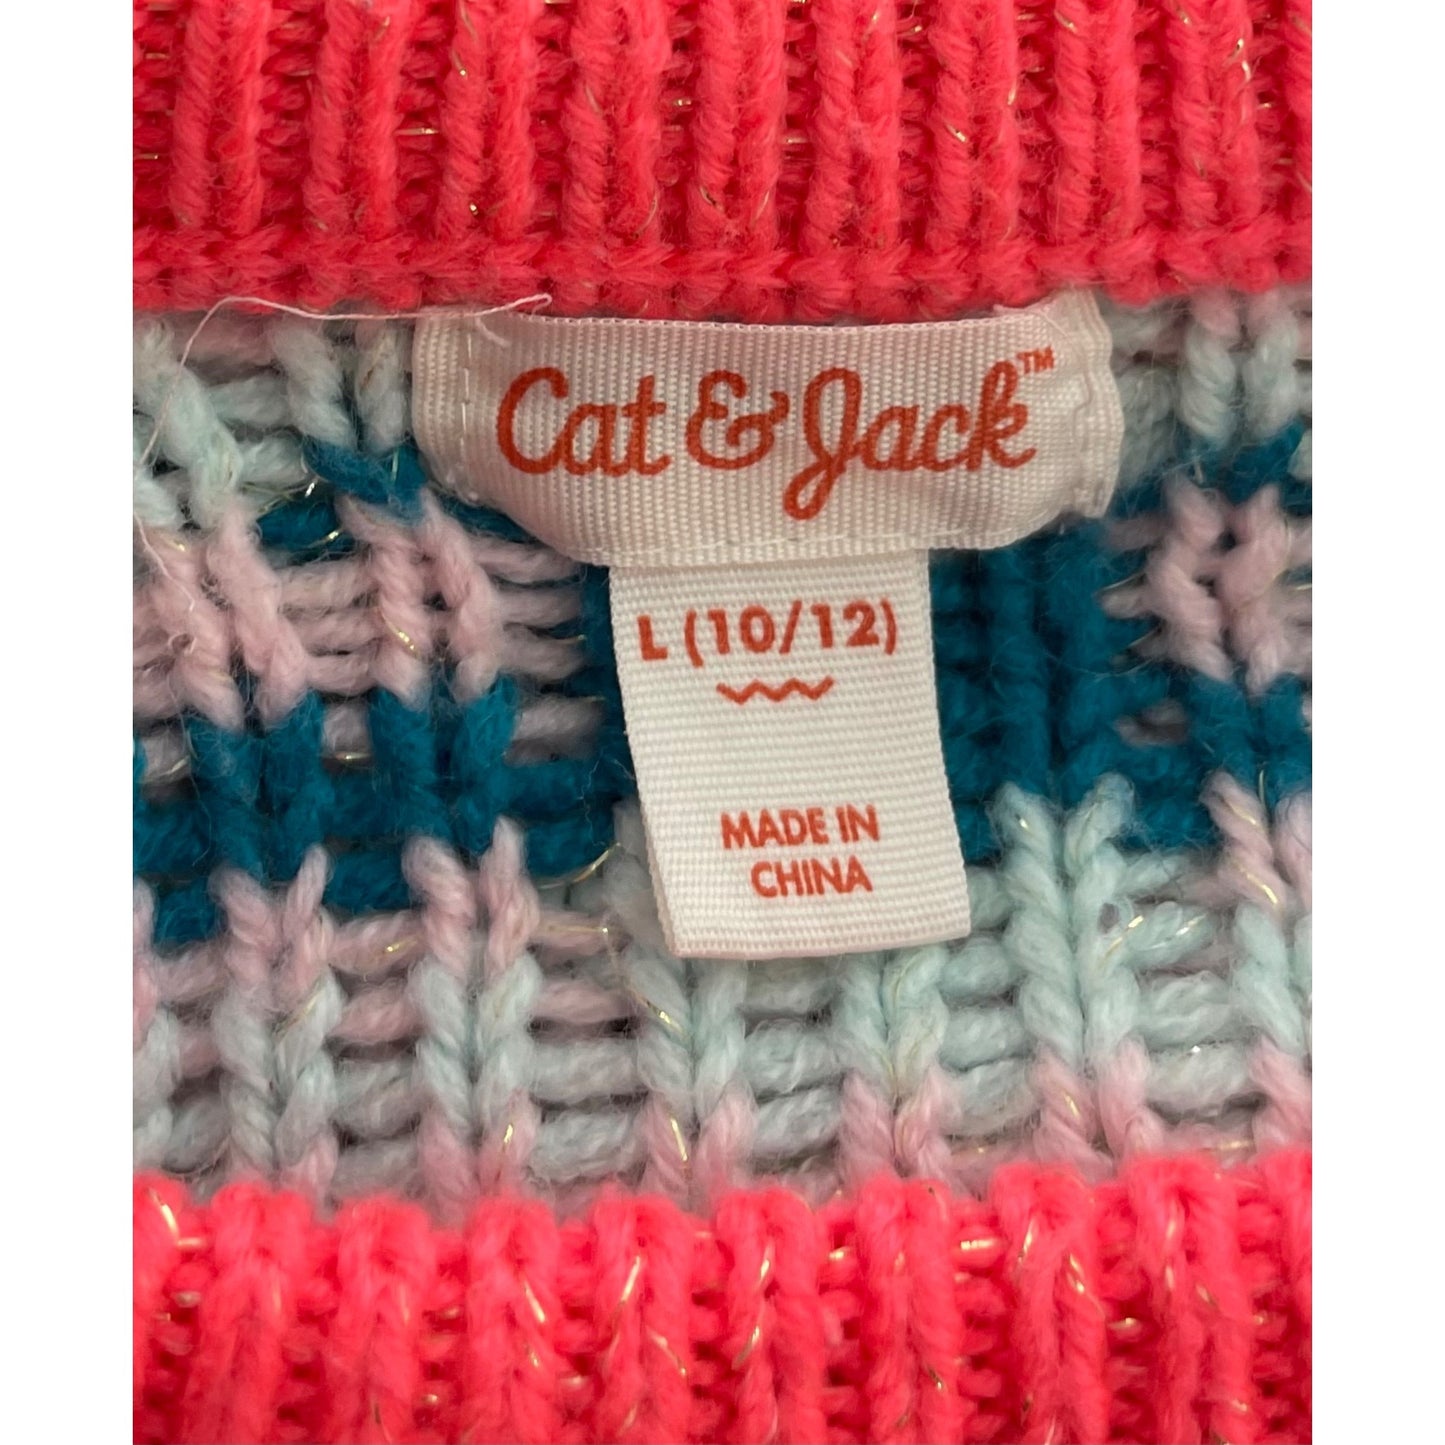 Cat & Jack Girl's Size Large (Age 10/12) Multi-Colored Knit Fringe Sweater